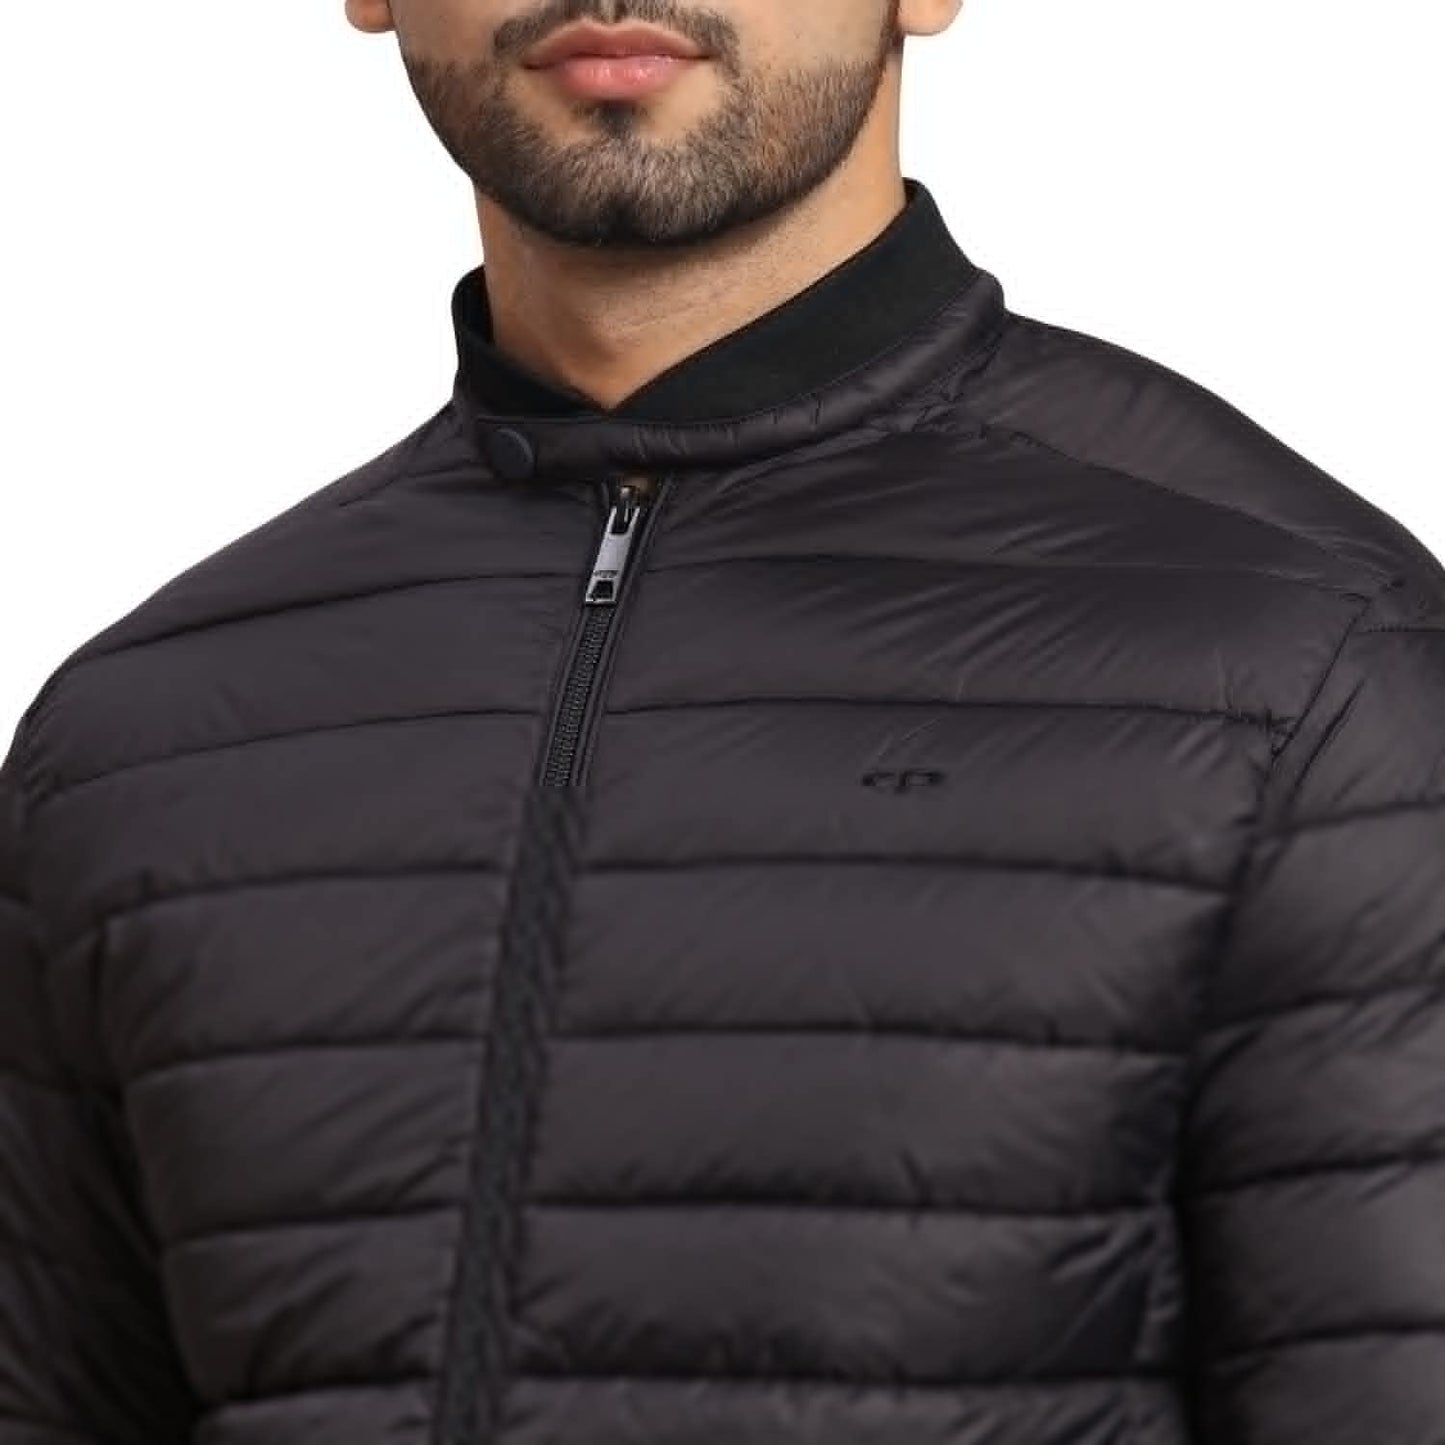 Colorplus Black Jacket (Size: M)-CMOA00945-K8 